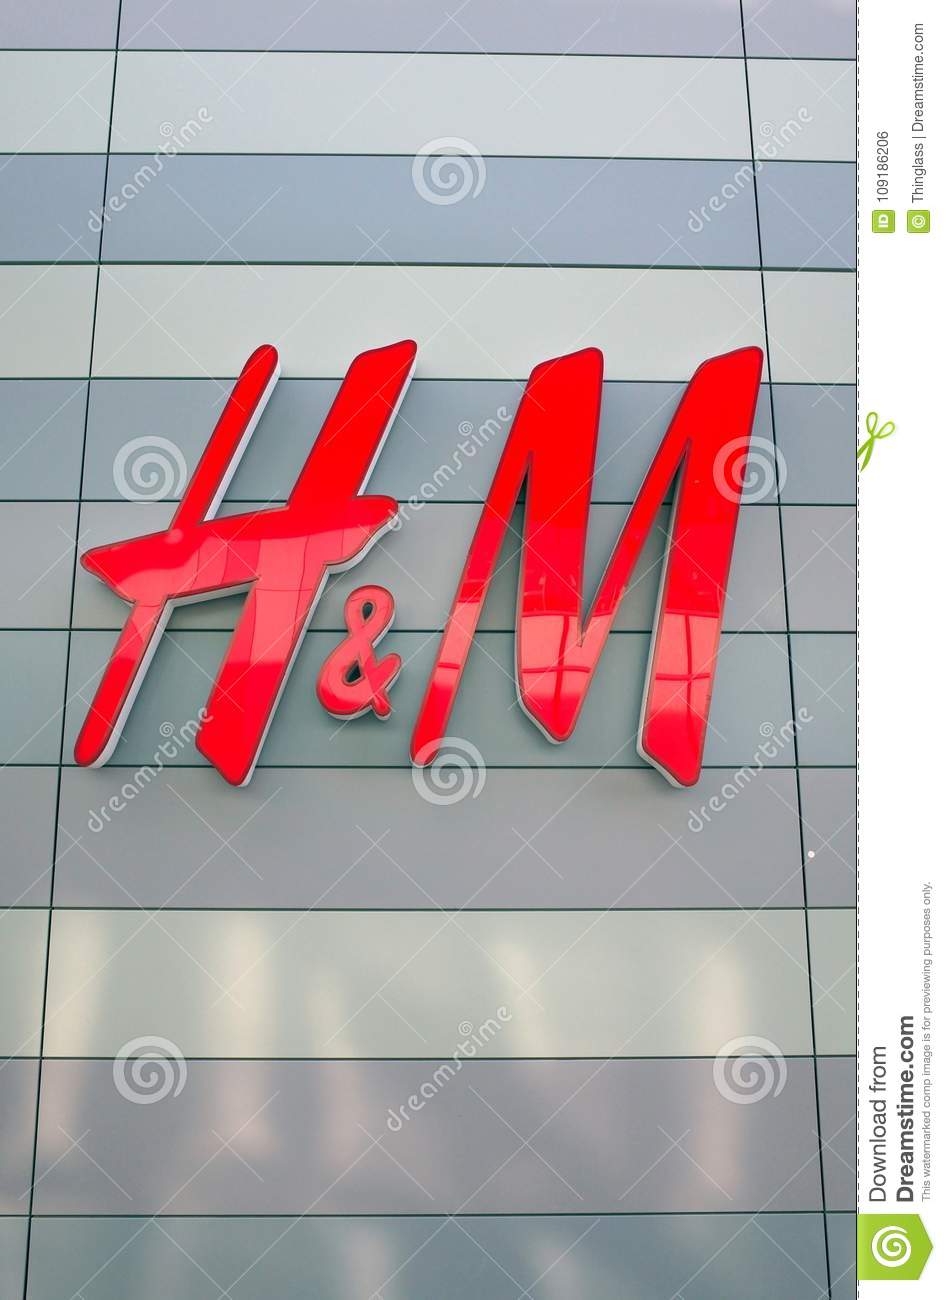 H&m Clothing Brand